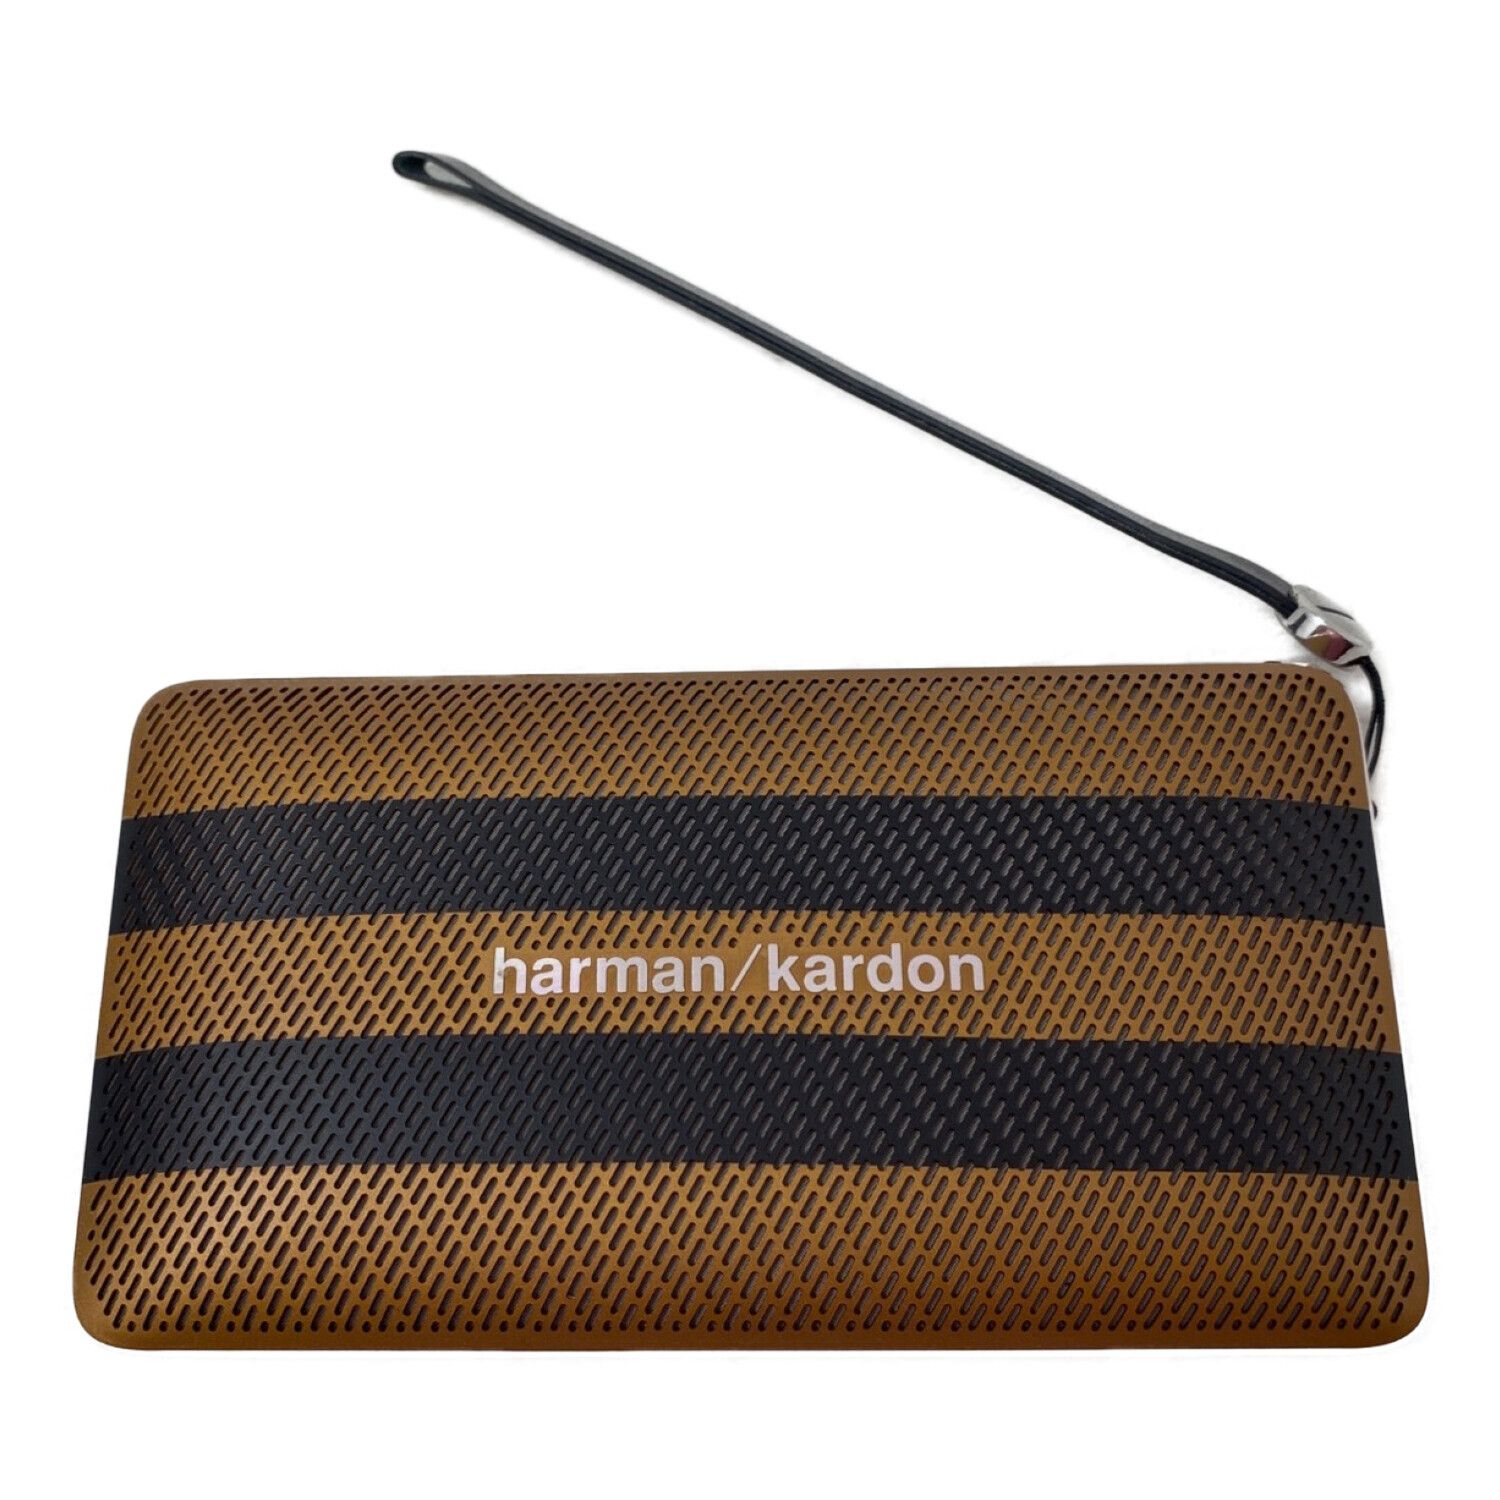 Harman/Kardon (ハーマンカードン) Bluetooth対応スピーカー 